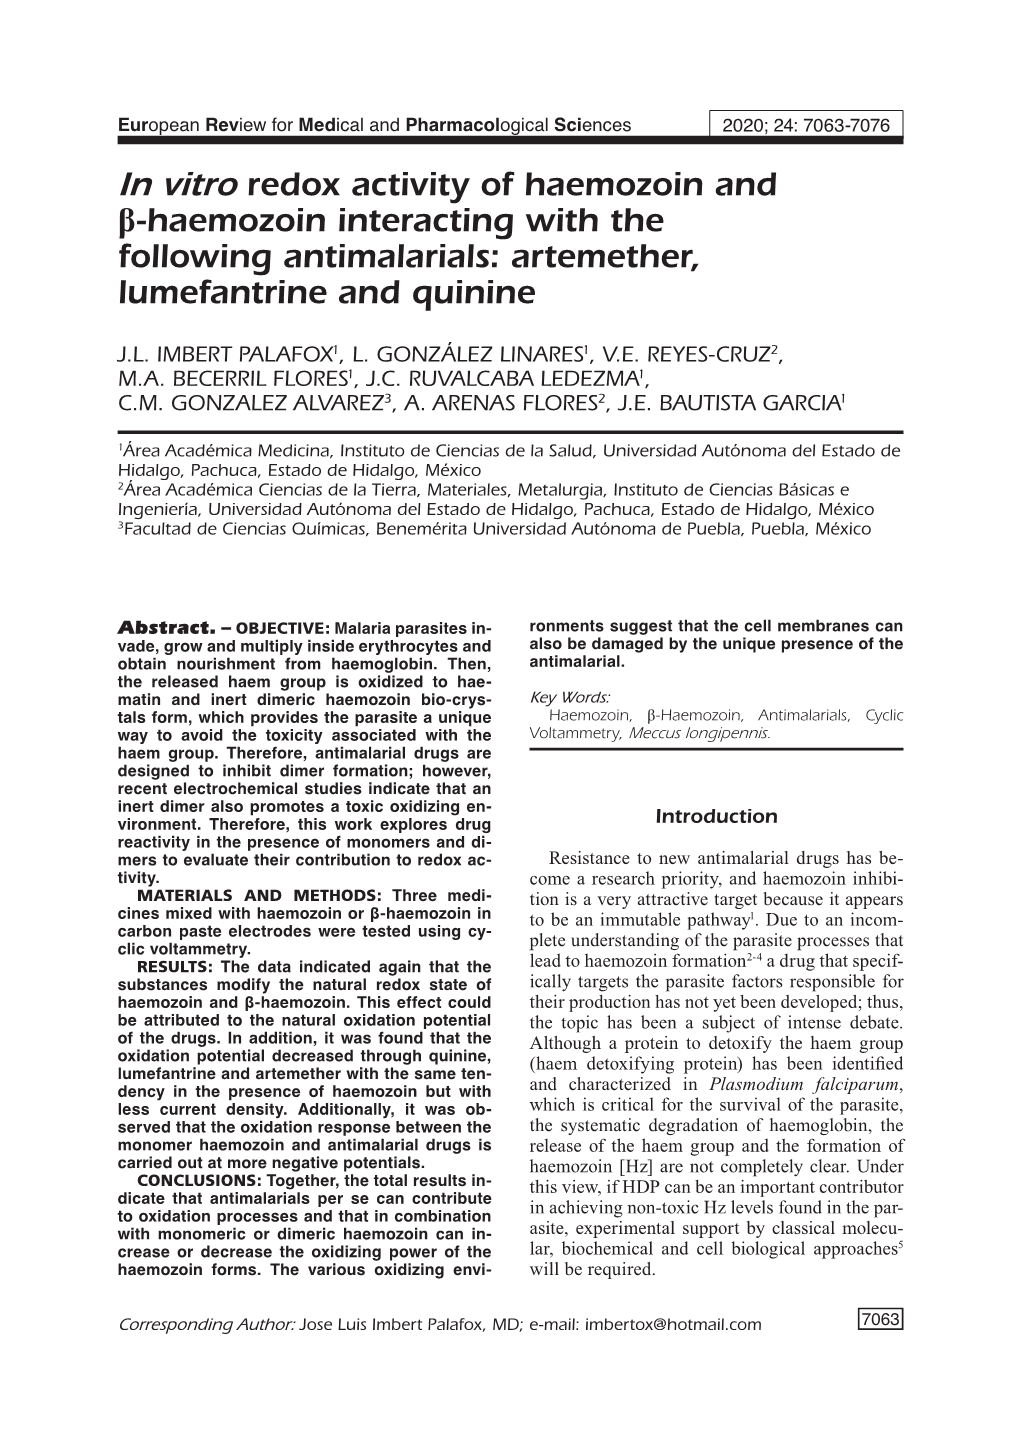 Artemether, Lumefantrine and Quinine